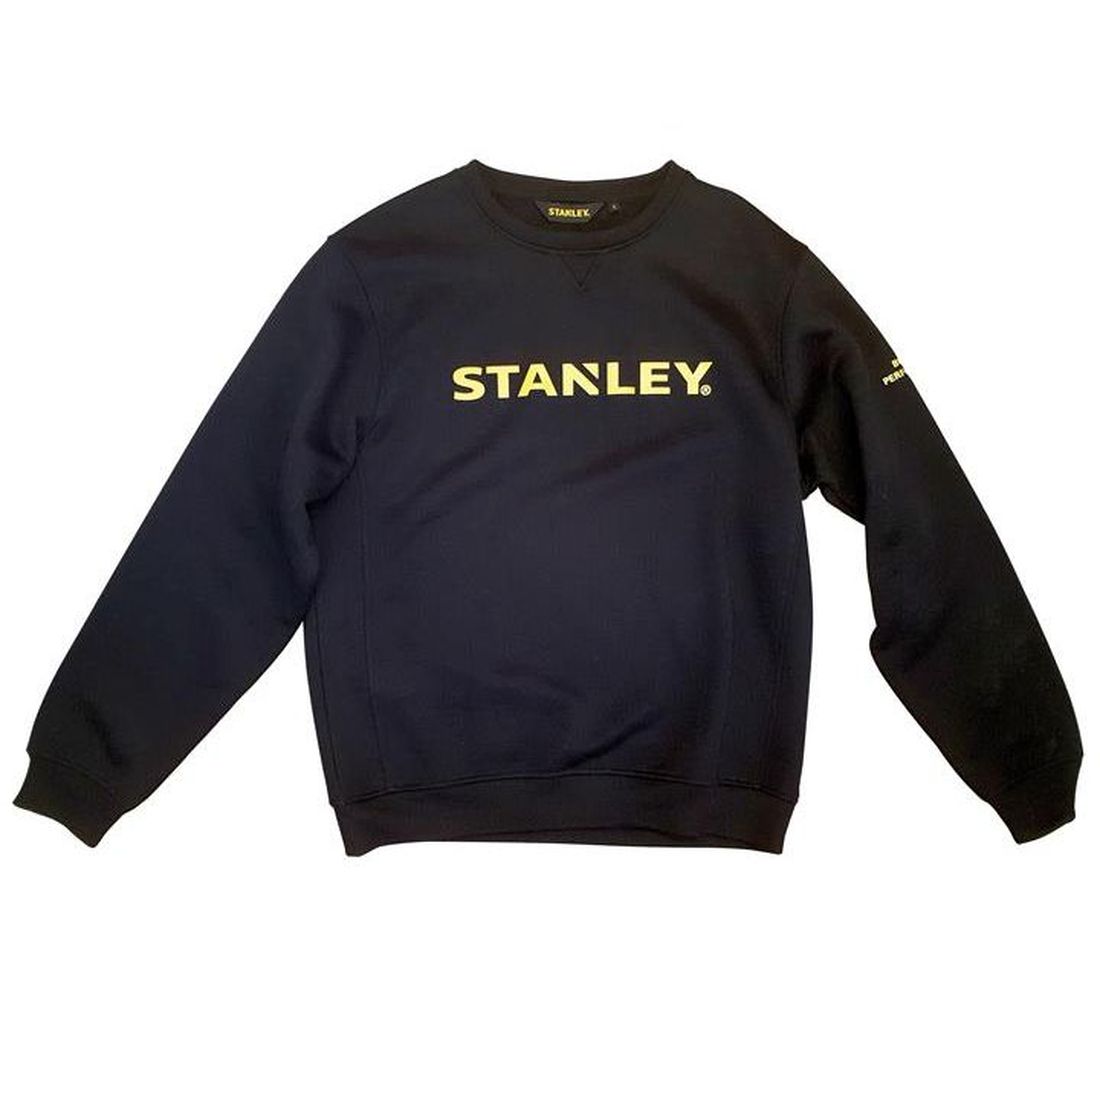 STANLEY Jackson Sweatshirt - M            